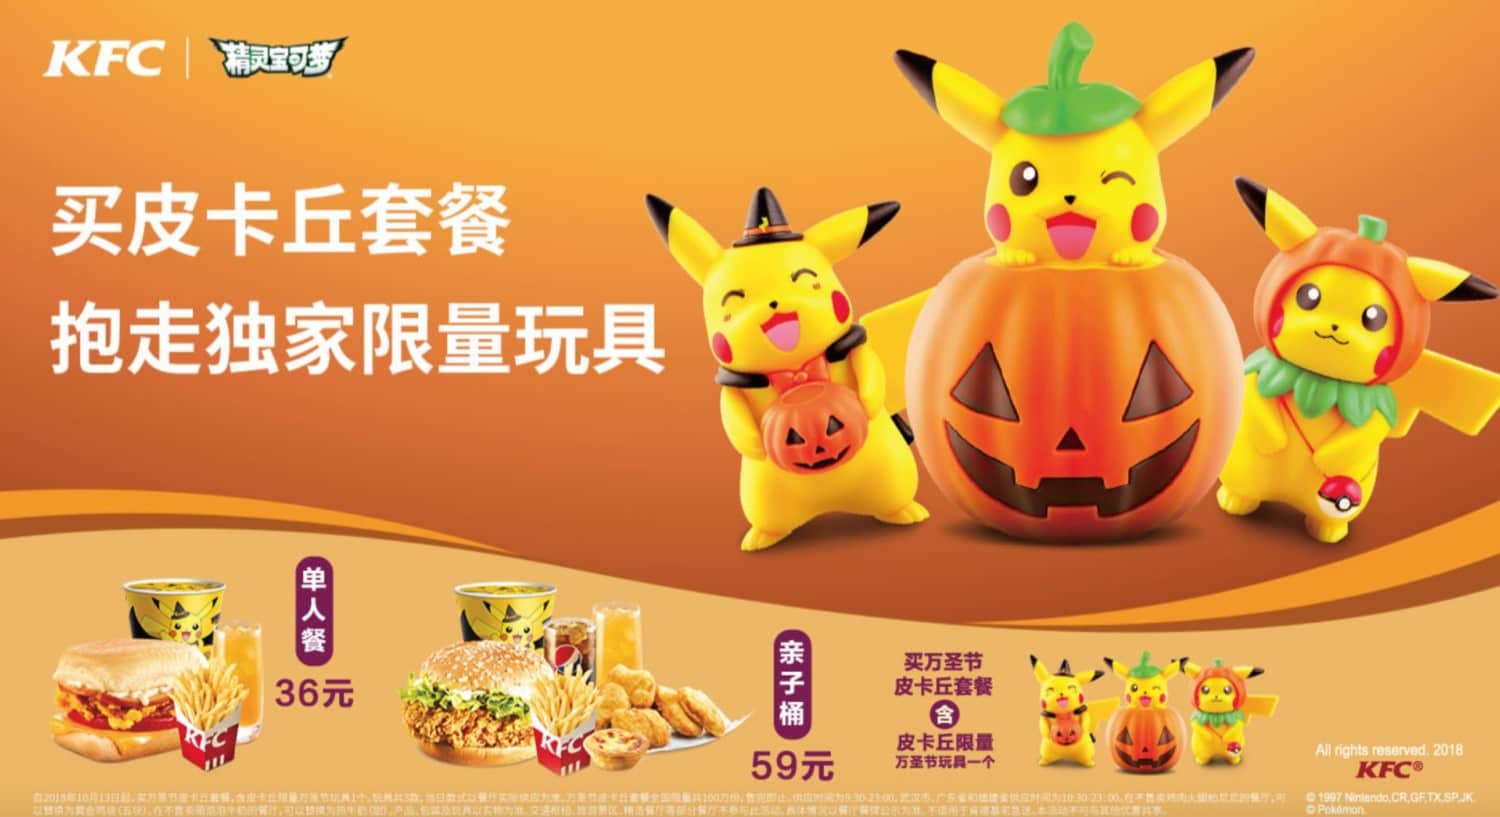 KFC de China regalará juguetes de Pikachu por Halloween